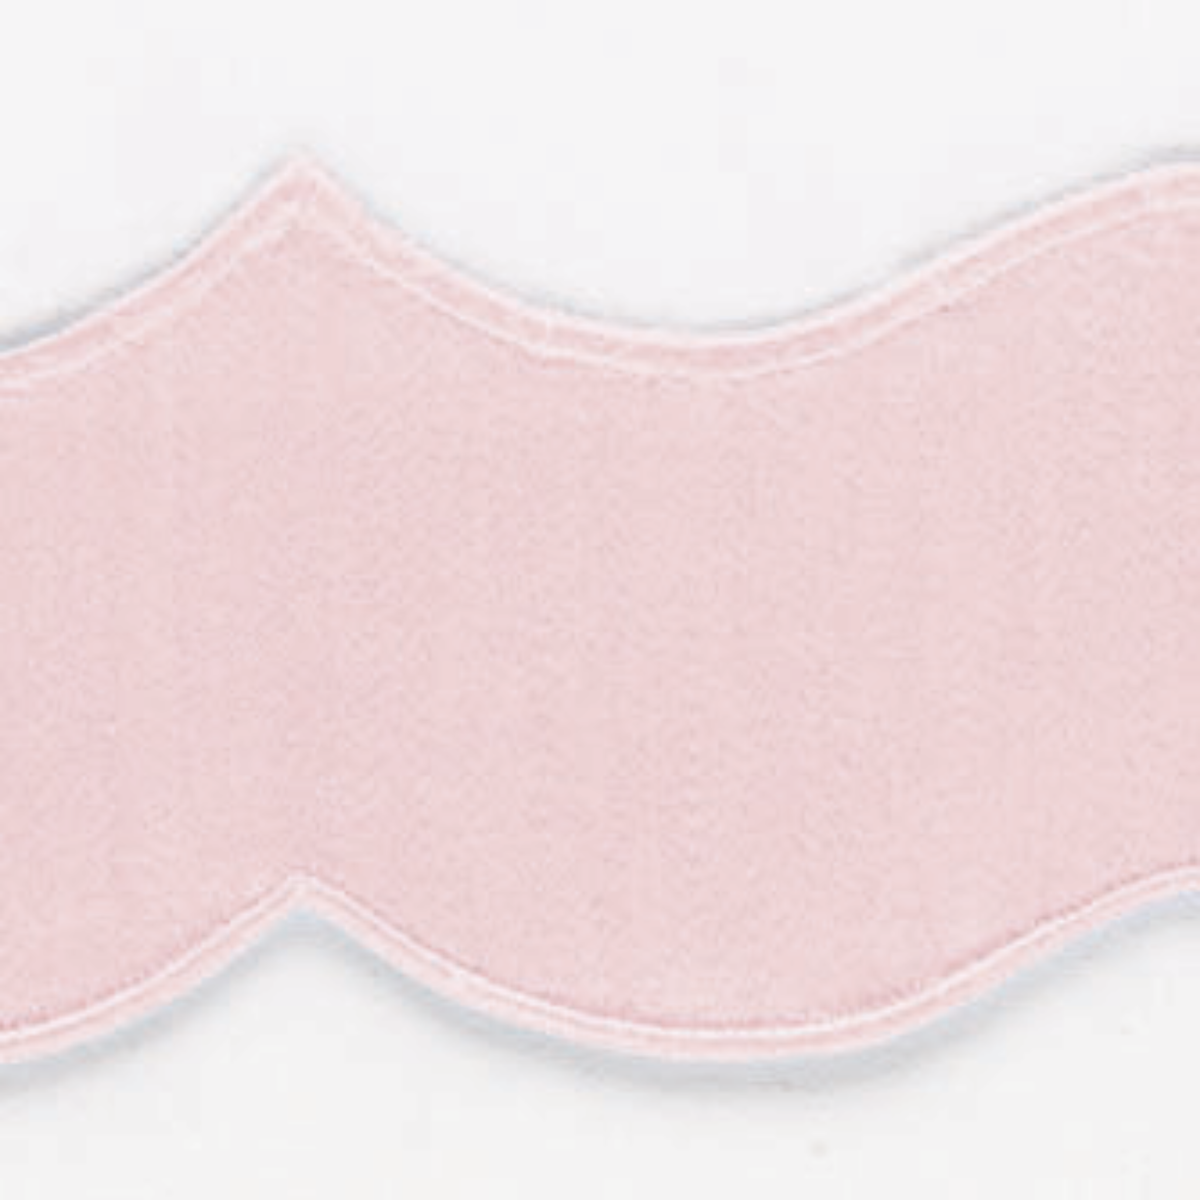 Swatch Sample of Matouk Lorelei Bedding in Pink Color